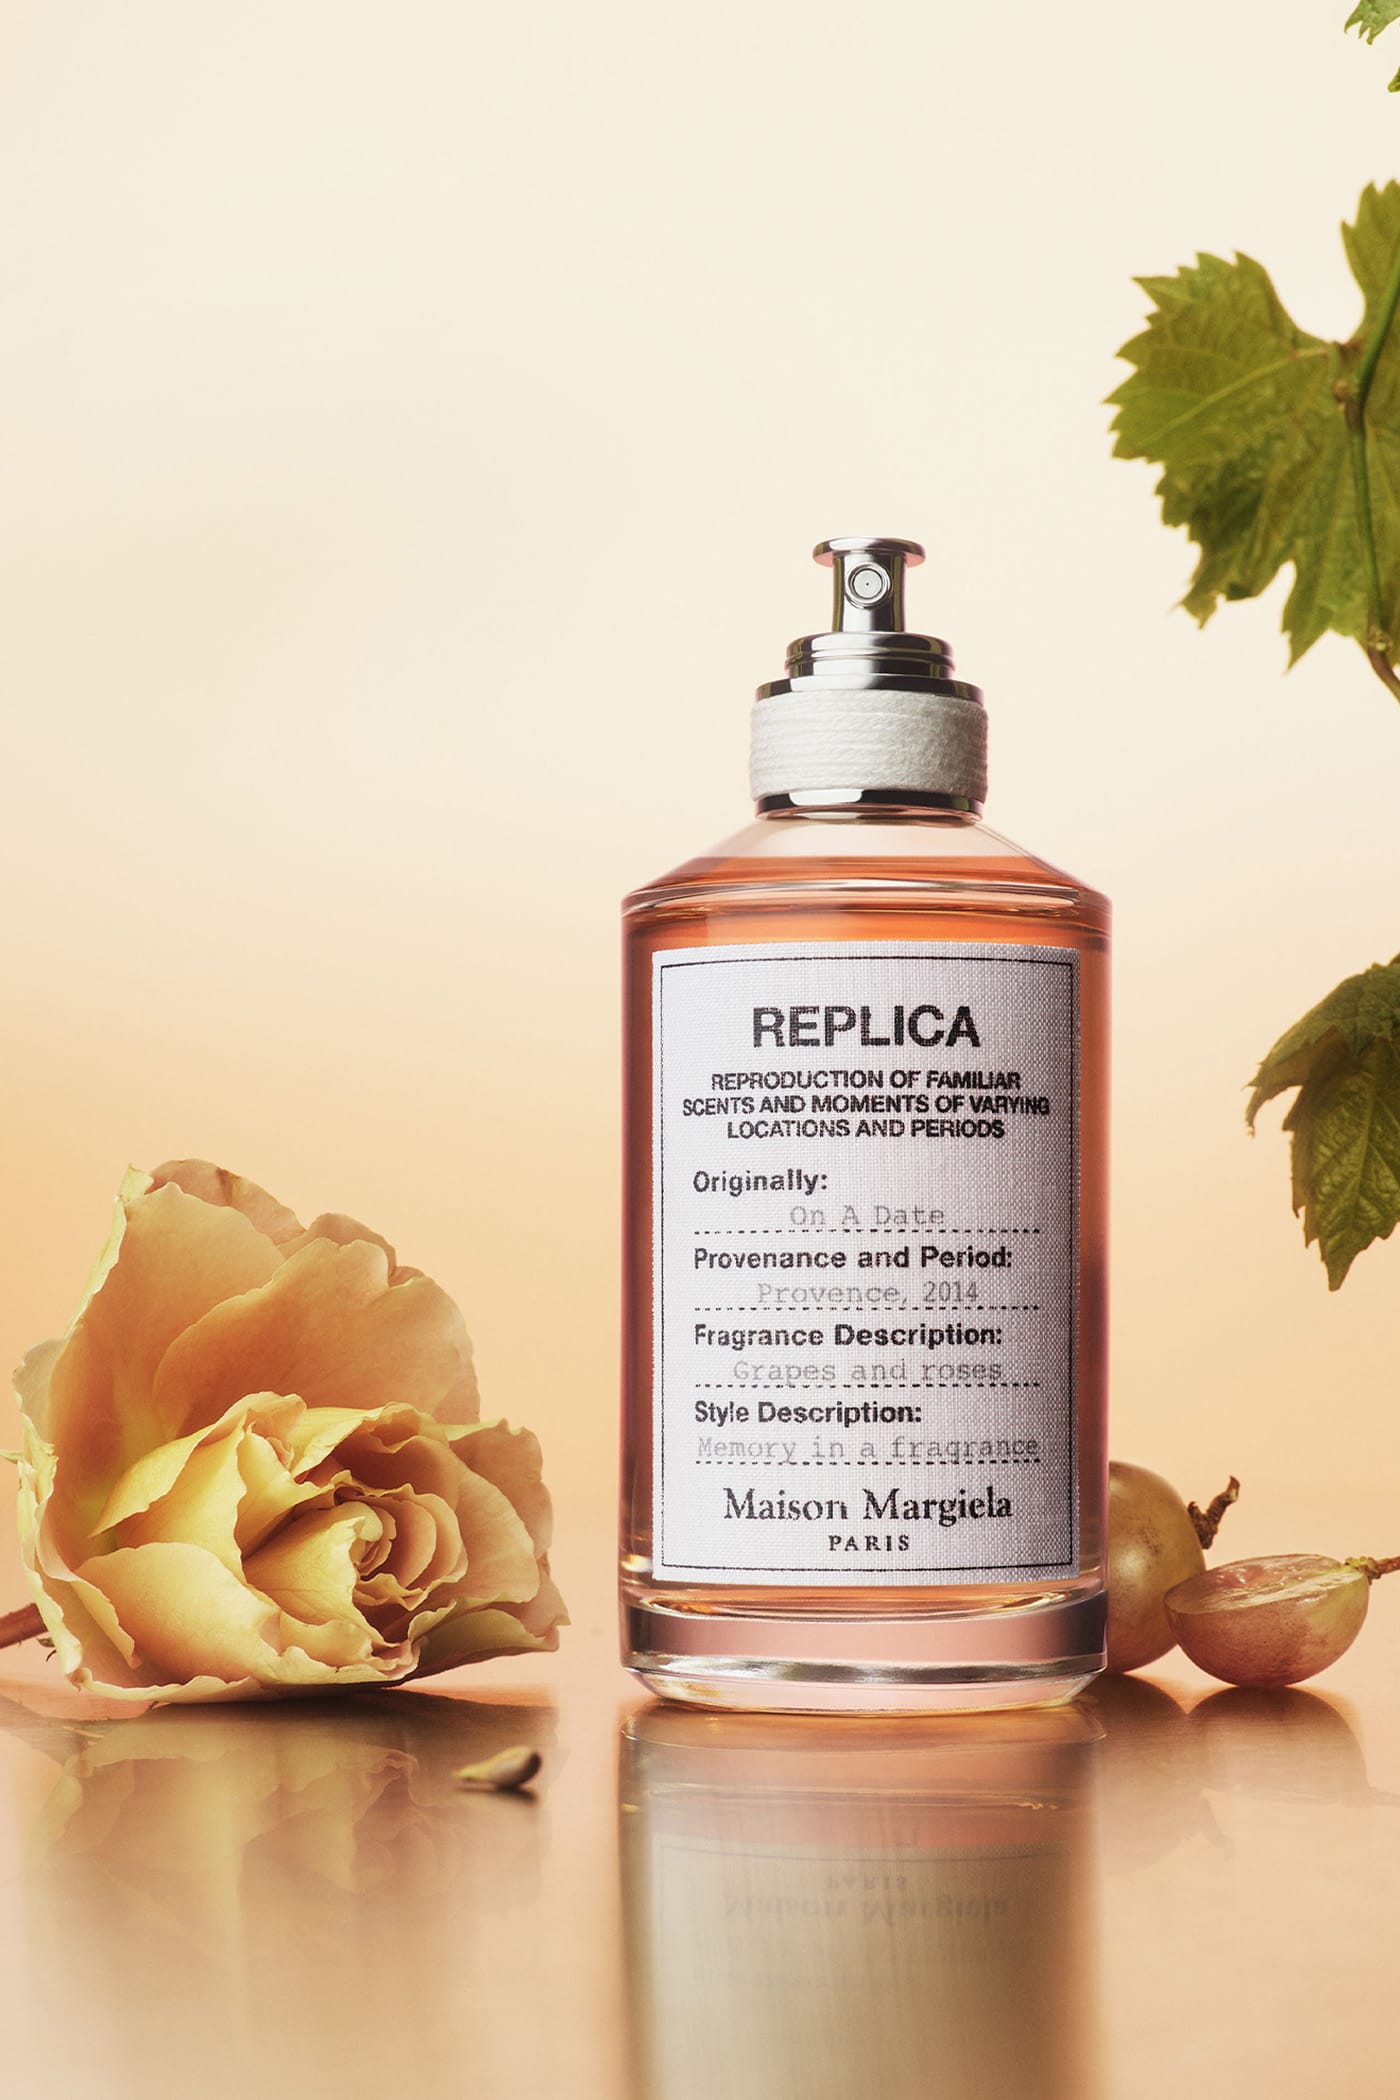 Maison Margiela Replica On a Date Fragrance Launch | Hypebeast